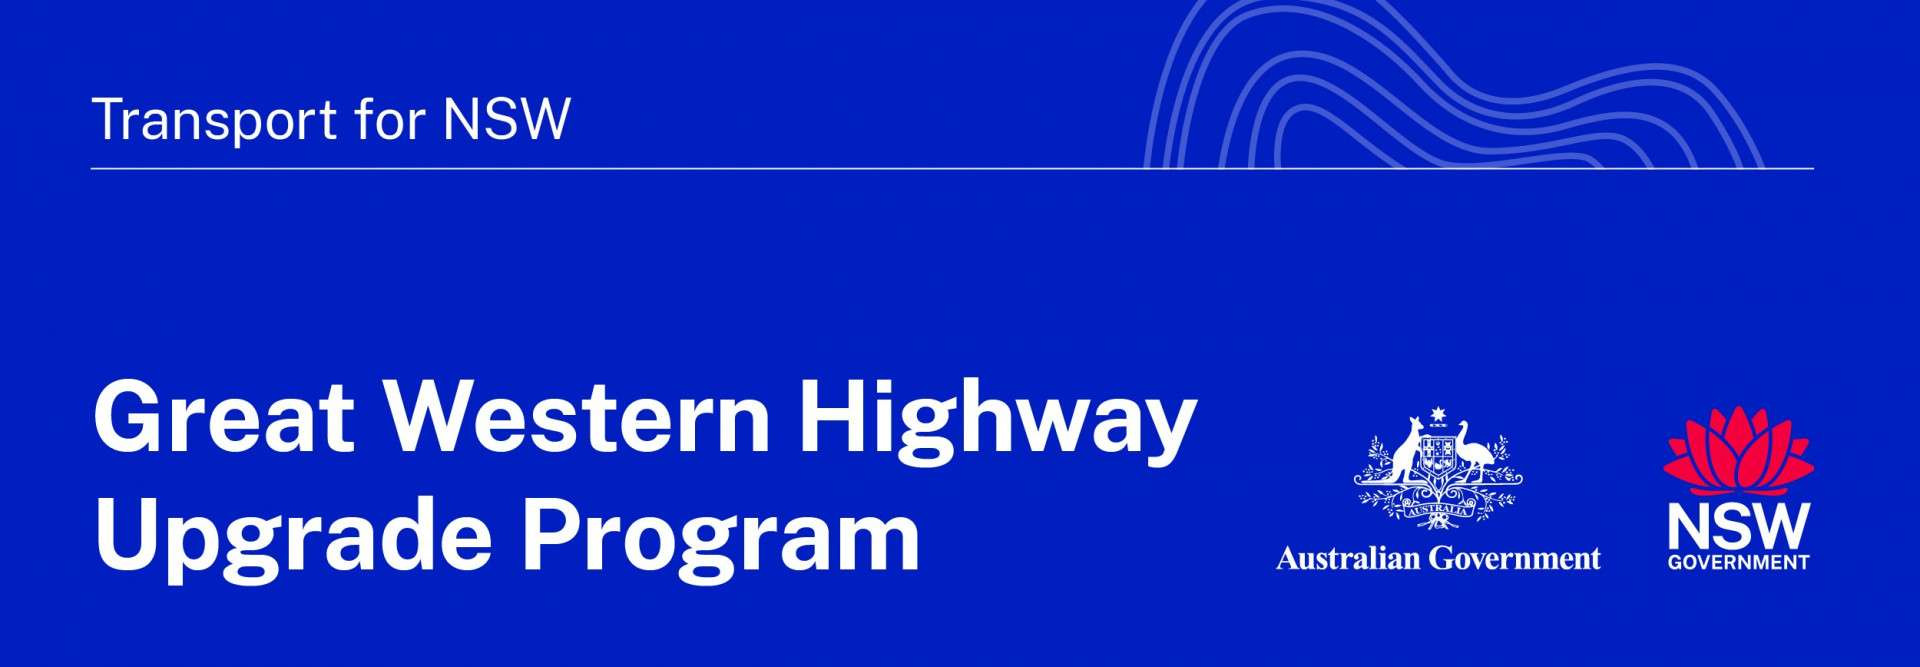 Great Western Highway Upgrade Program banner